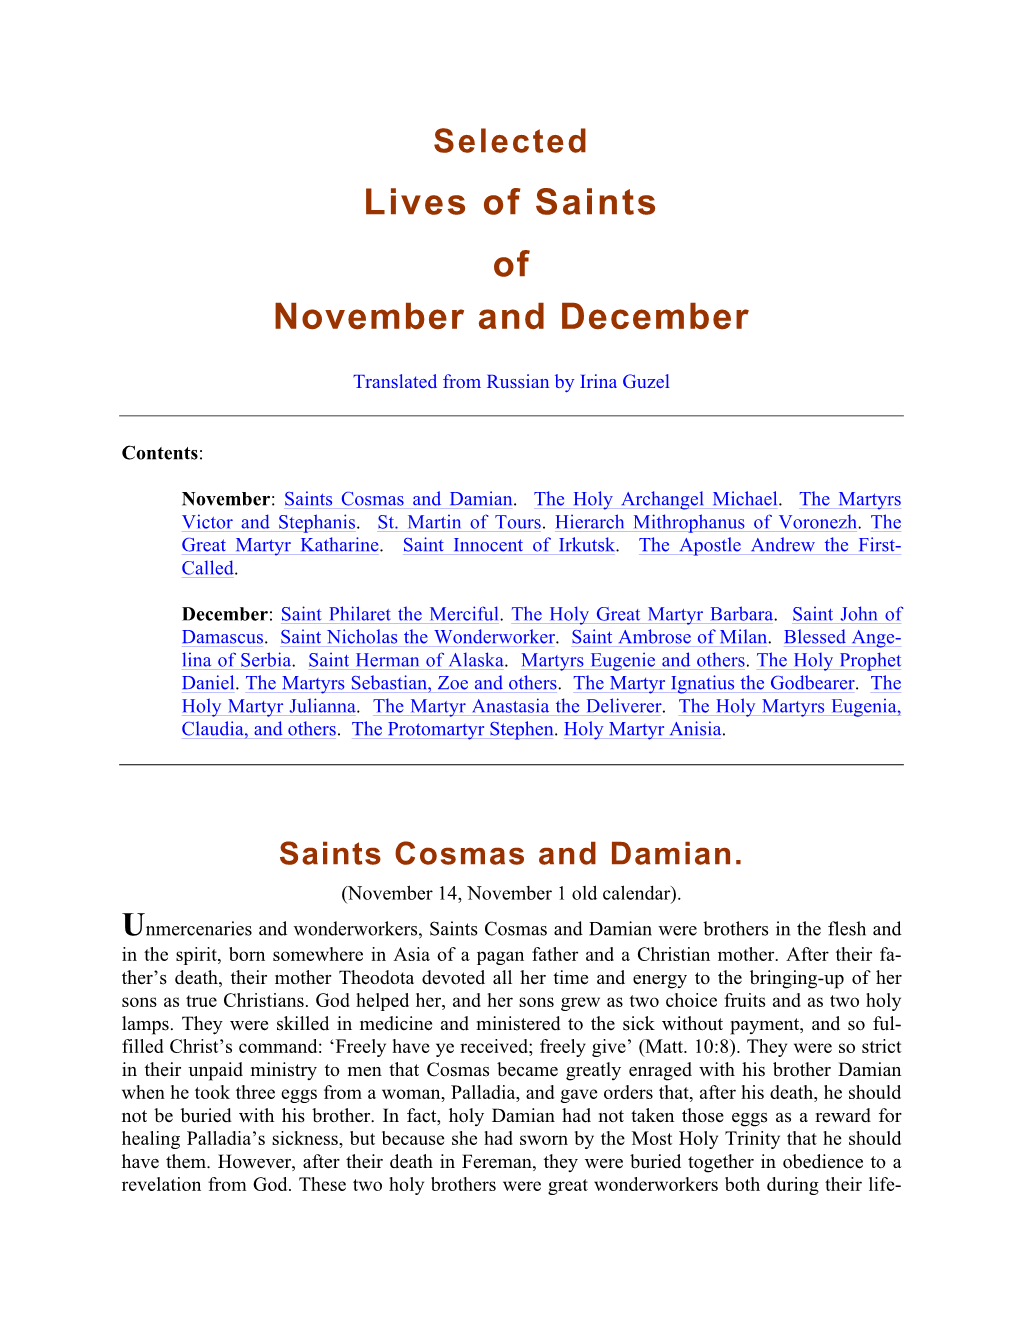 Lives of Saints of November and December